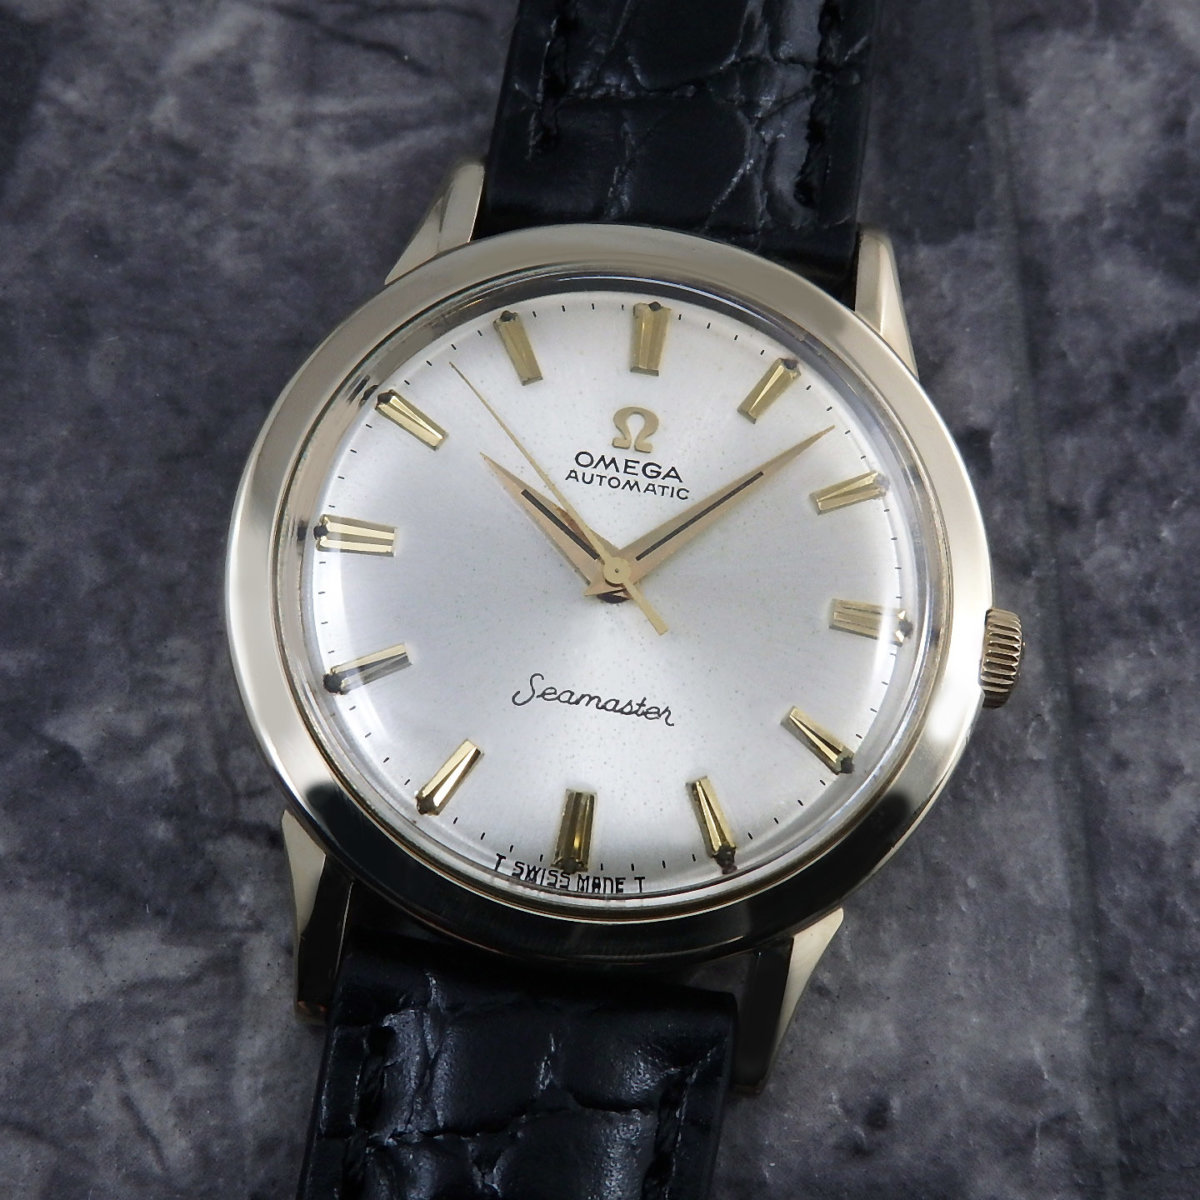 1960s オメガ シーマスター アンティーク 腕時計 希少タイプ 1966年